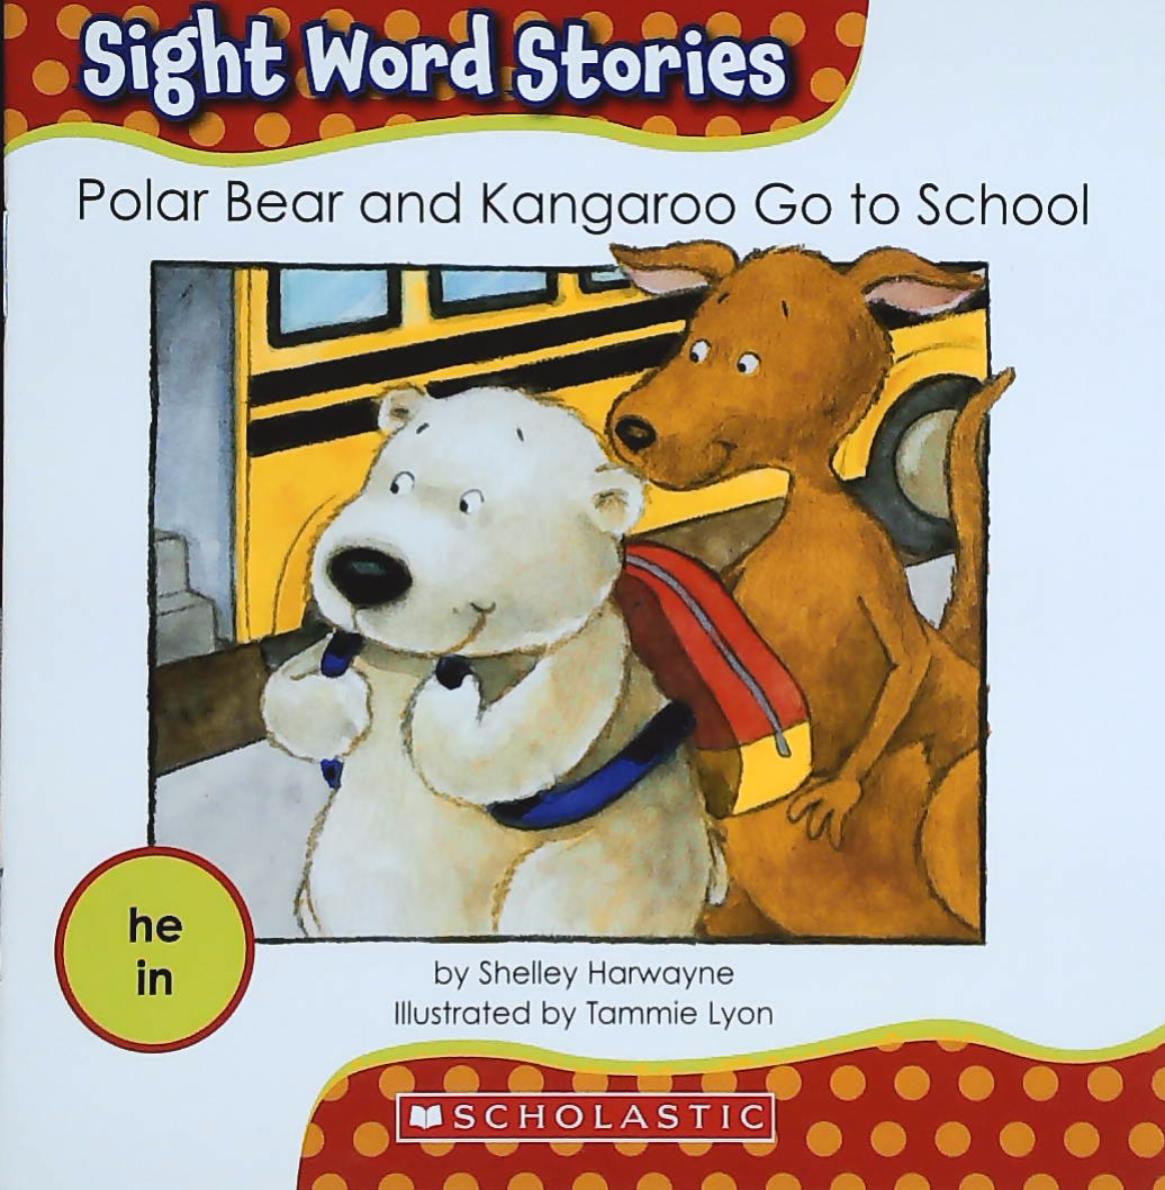 Livre ISBN 0545167868 Sight Word Stories : Polar Bear and Kangaroo Go to School (Shelley Harwayne)